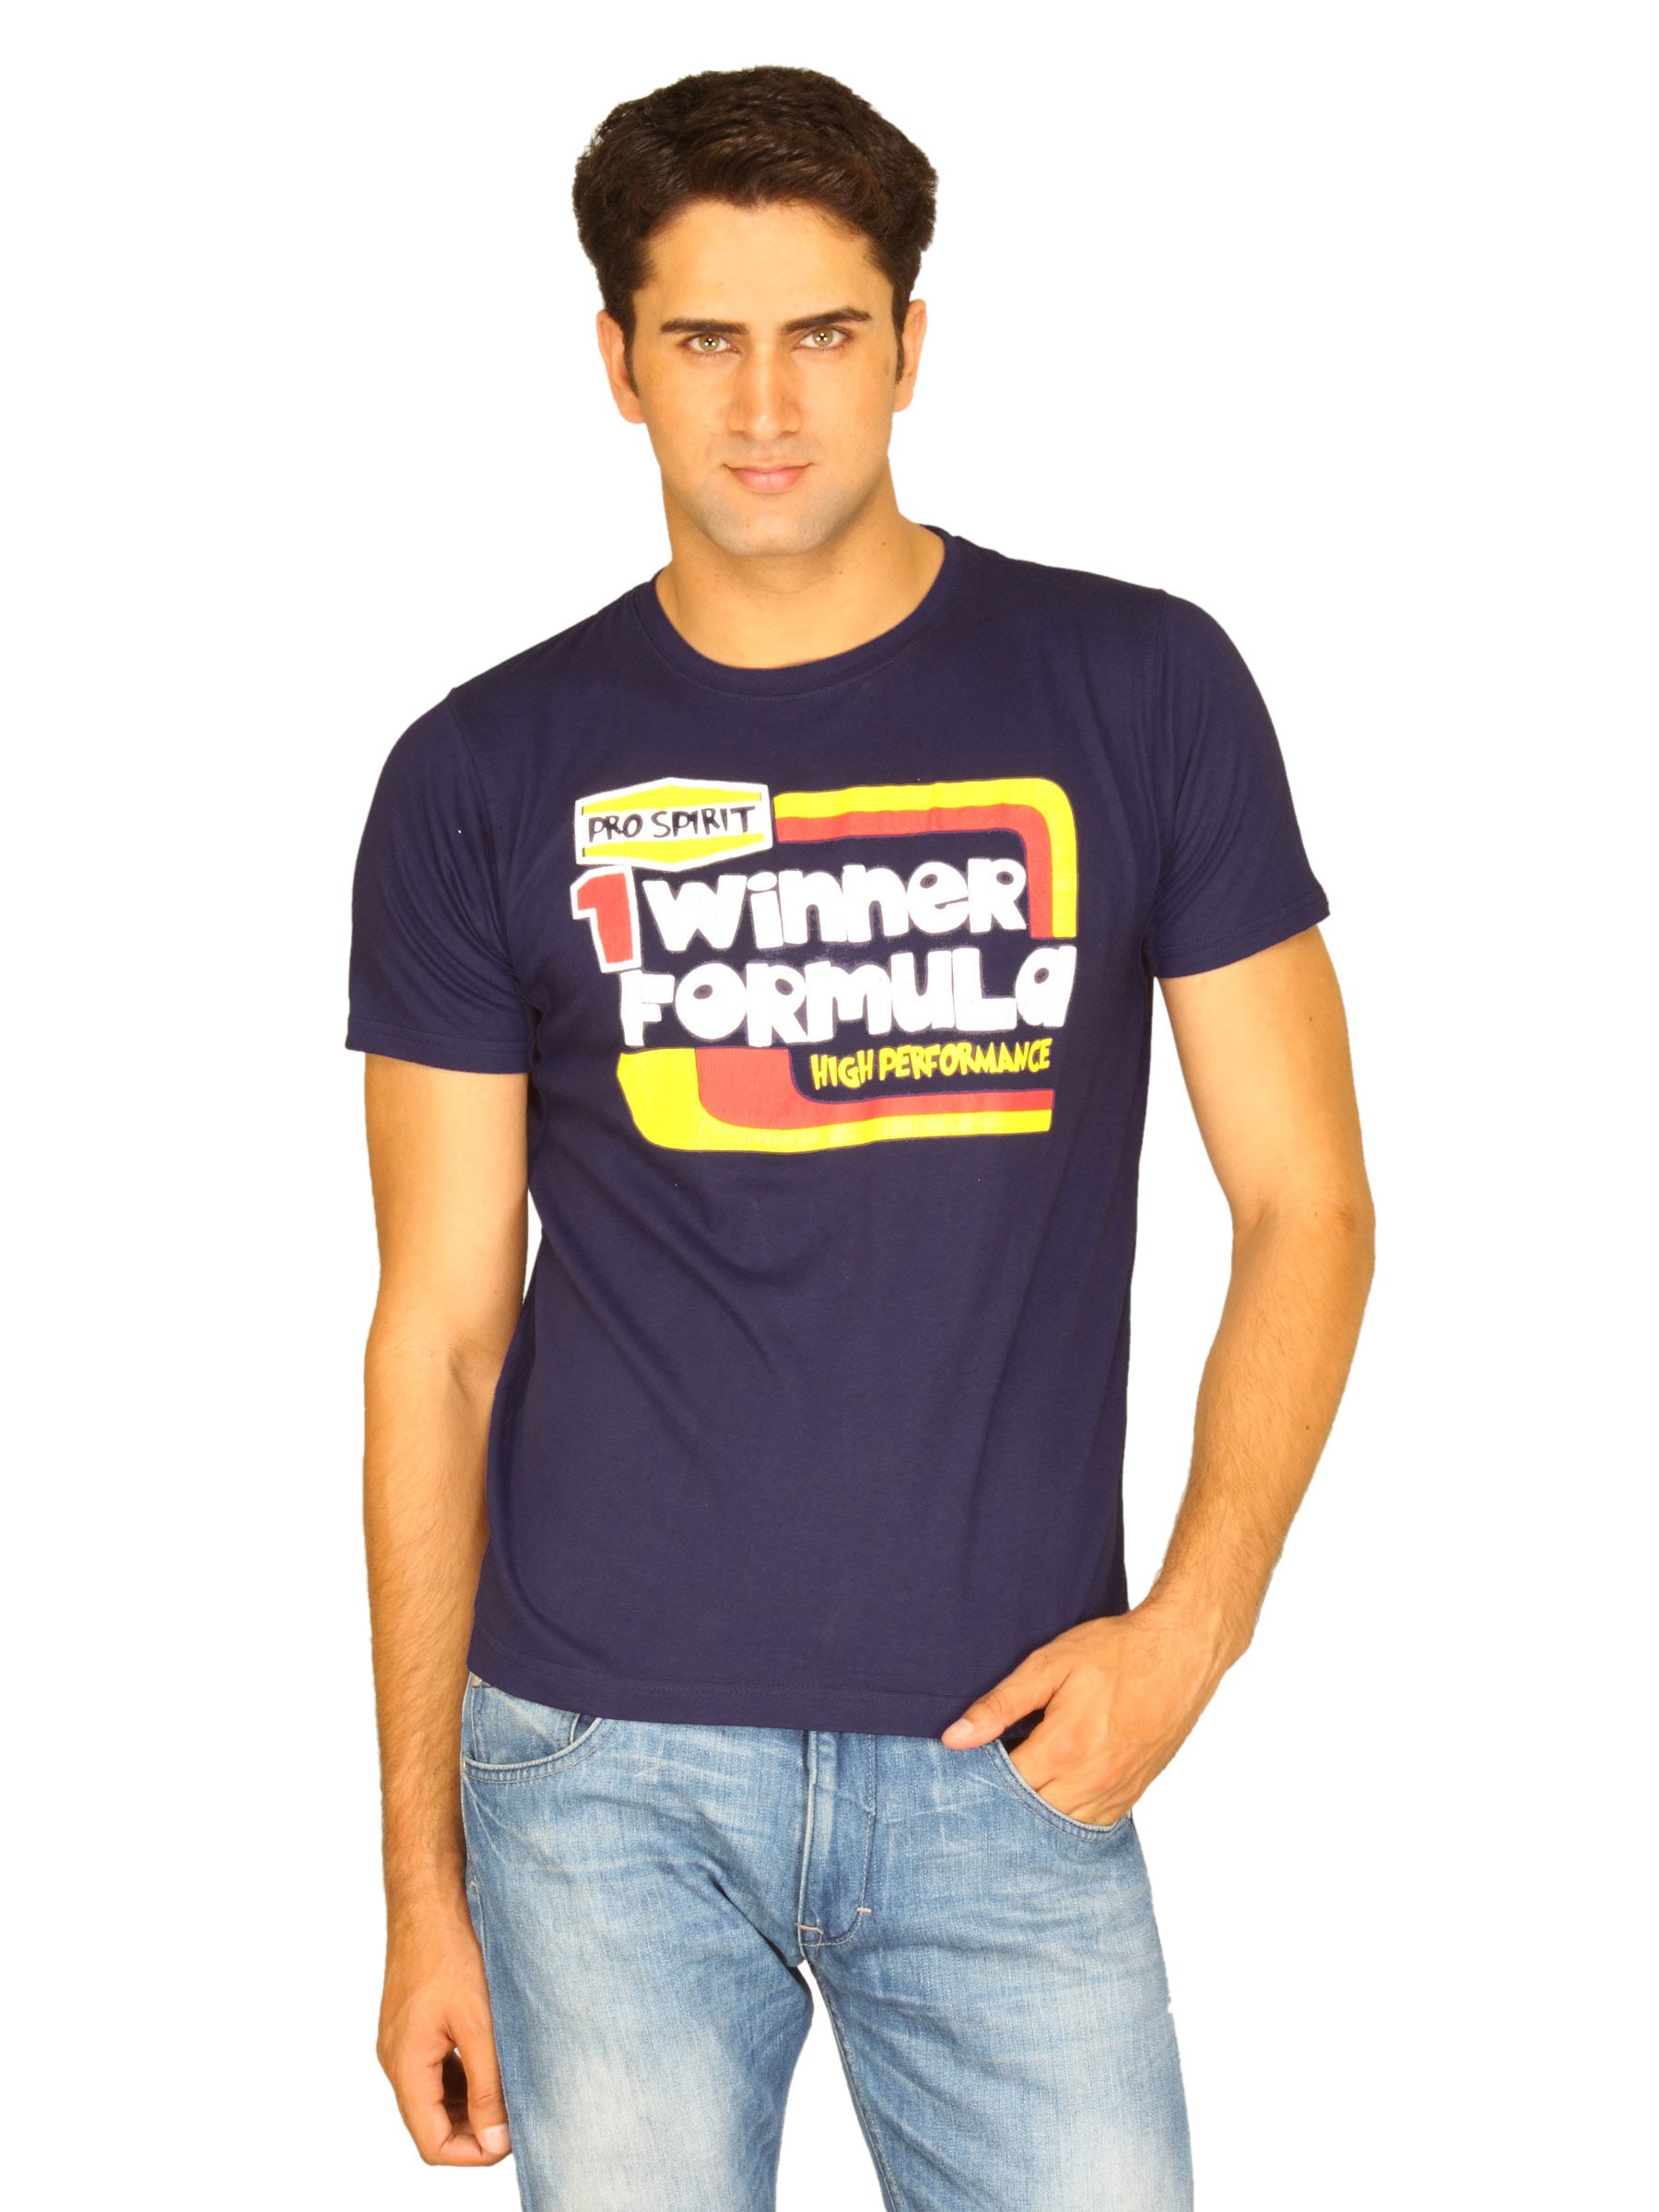 Probase Men's Winner Formula Navy T-shirt